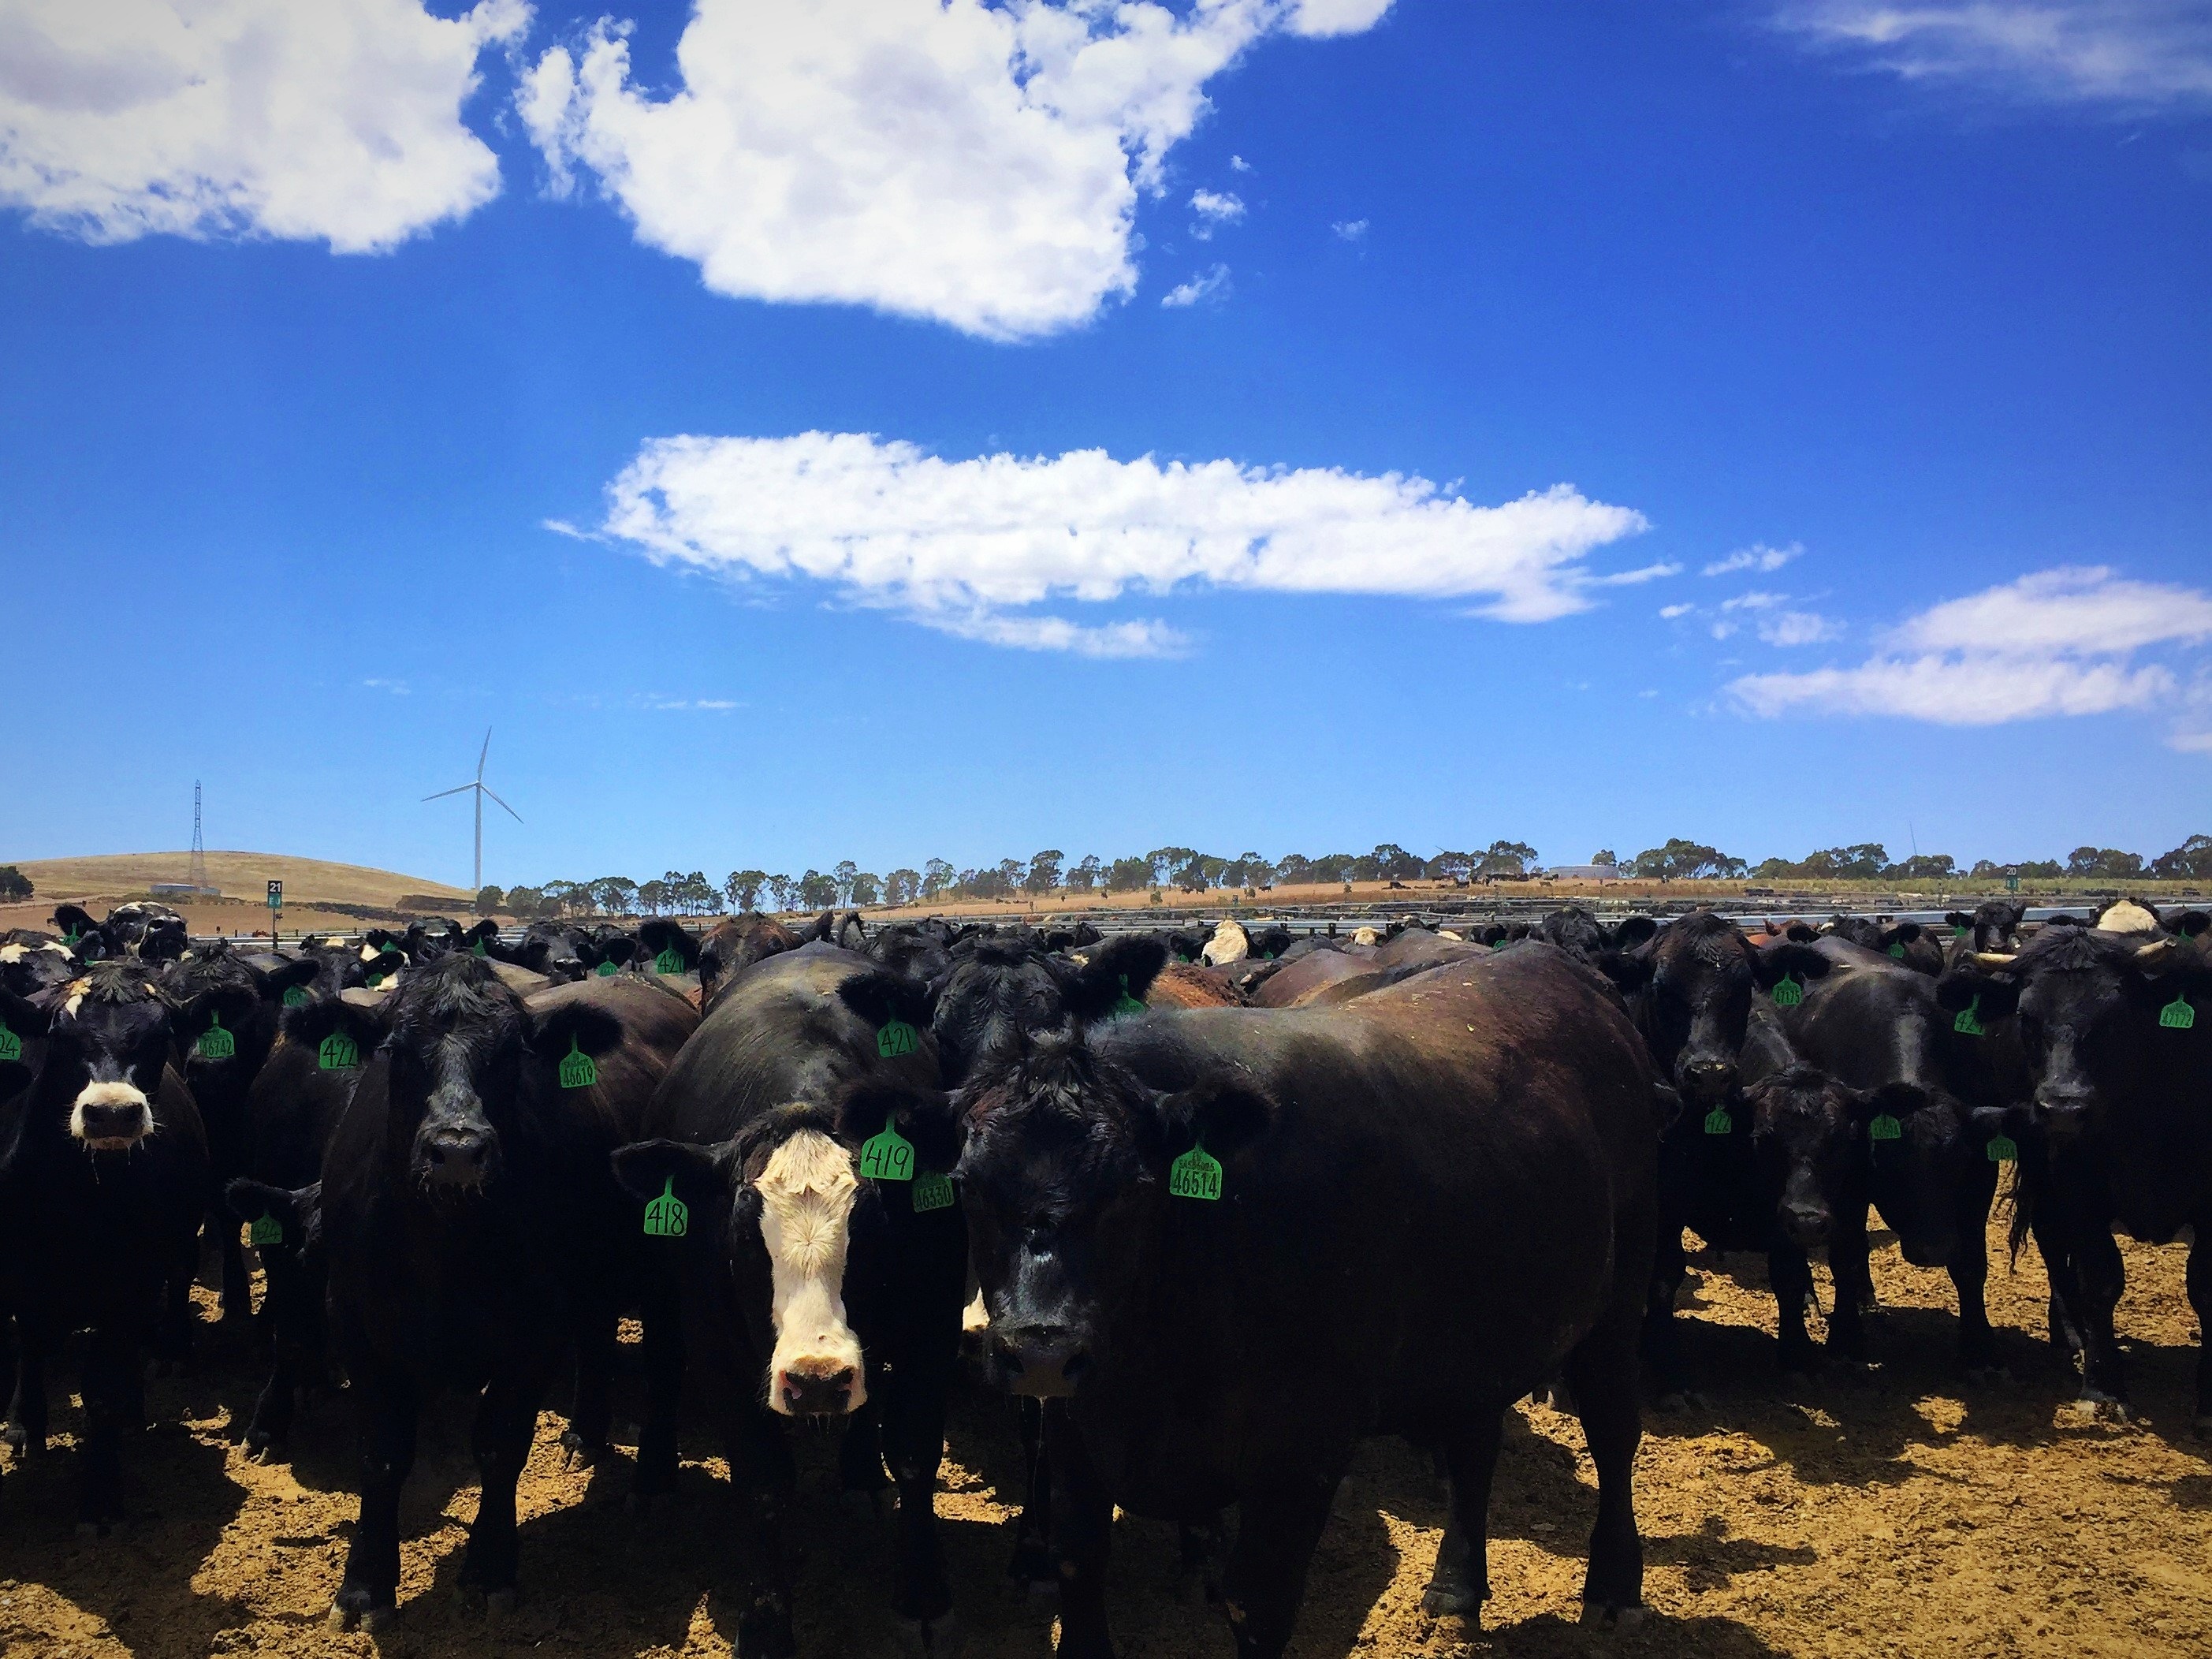 PRS Cattle, Burra South Australia